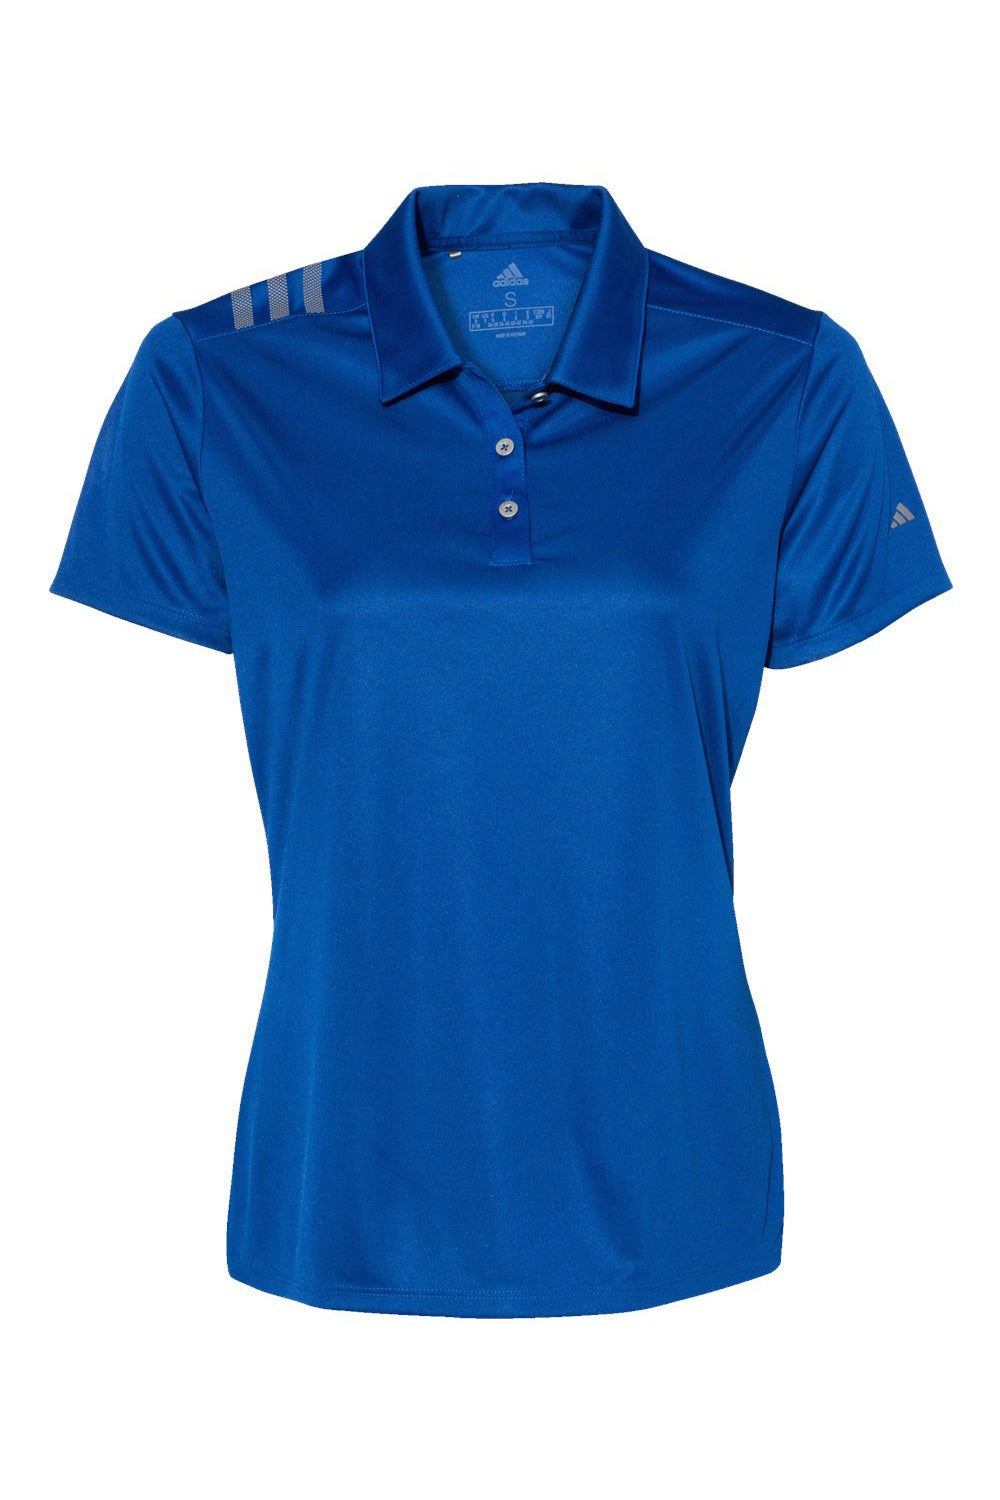 Adidas A325 Womens 3 Stripes UPF 50+ Short Sleeve Polo Shirt Collegiate Royal Blue/Grey Flat Front